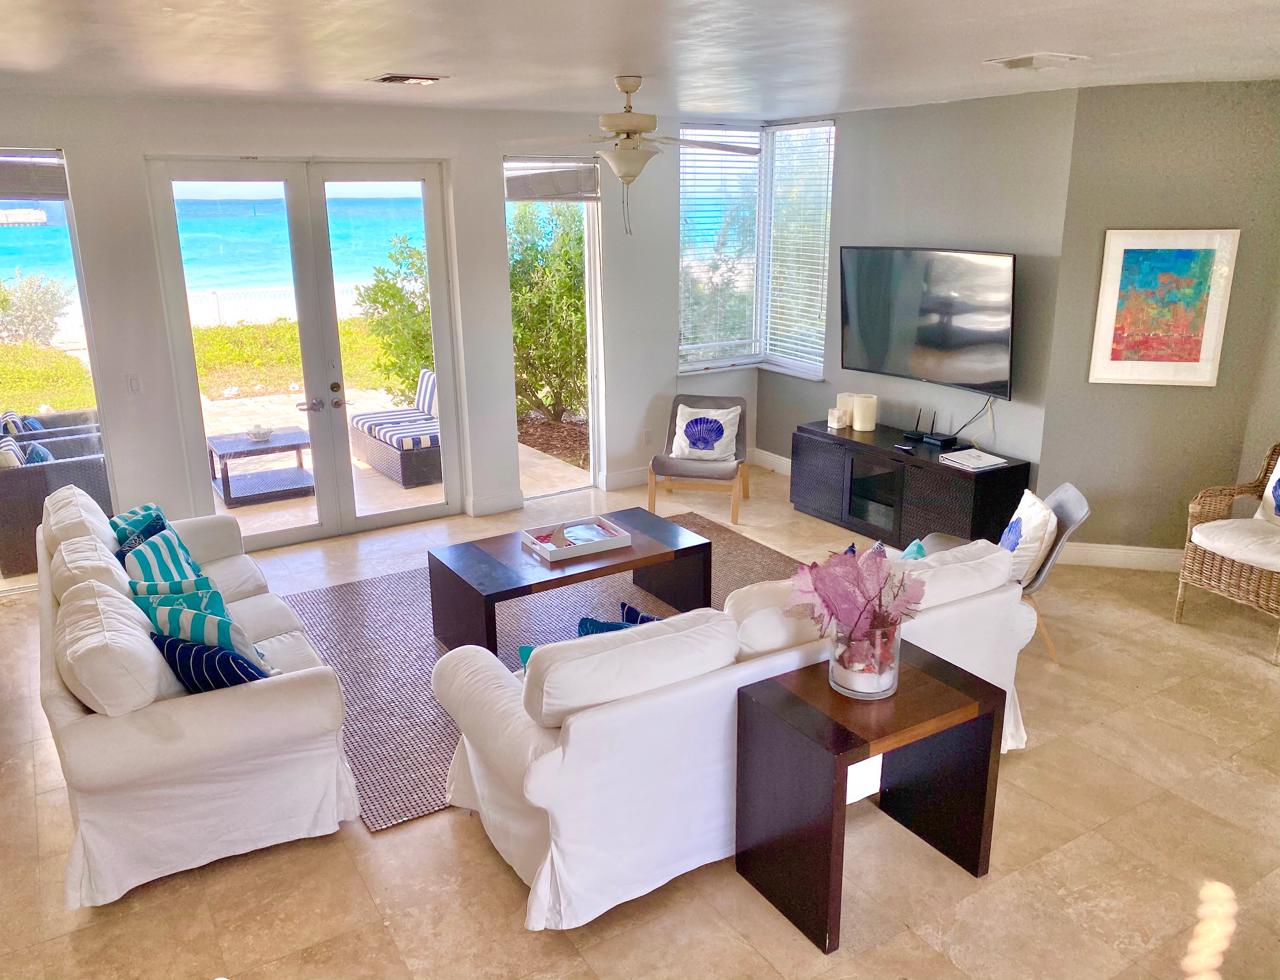 Bimini Bay Beachfront Home For Sale